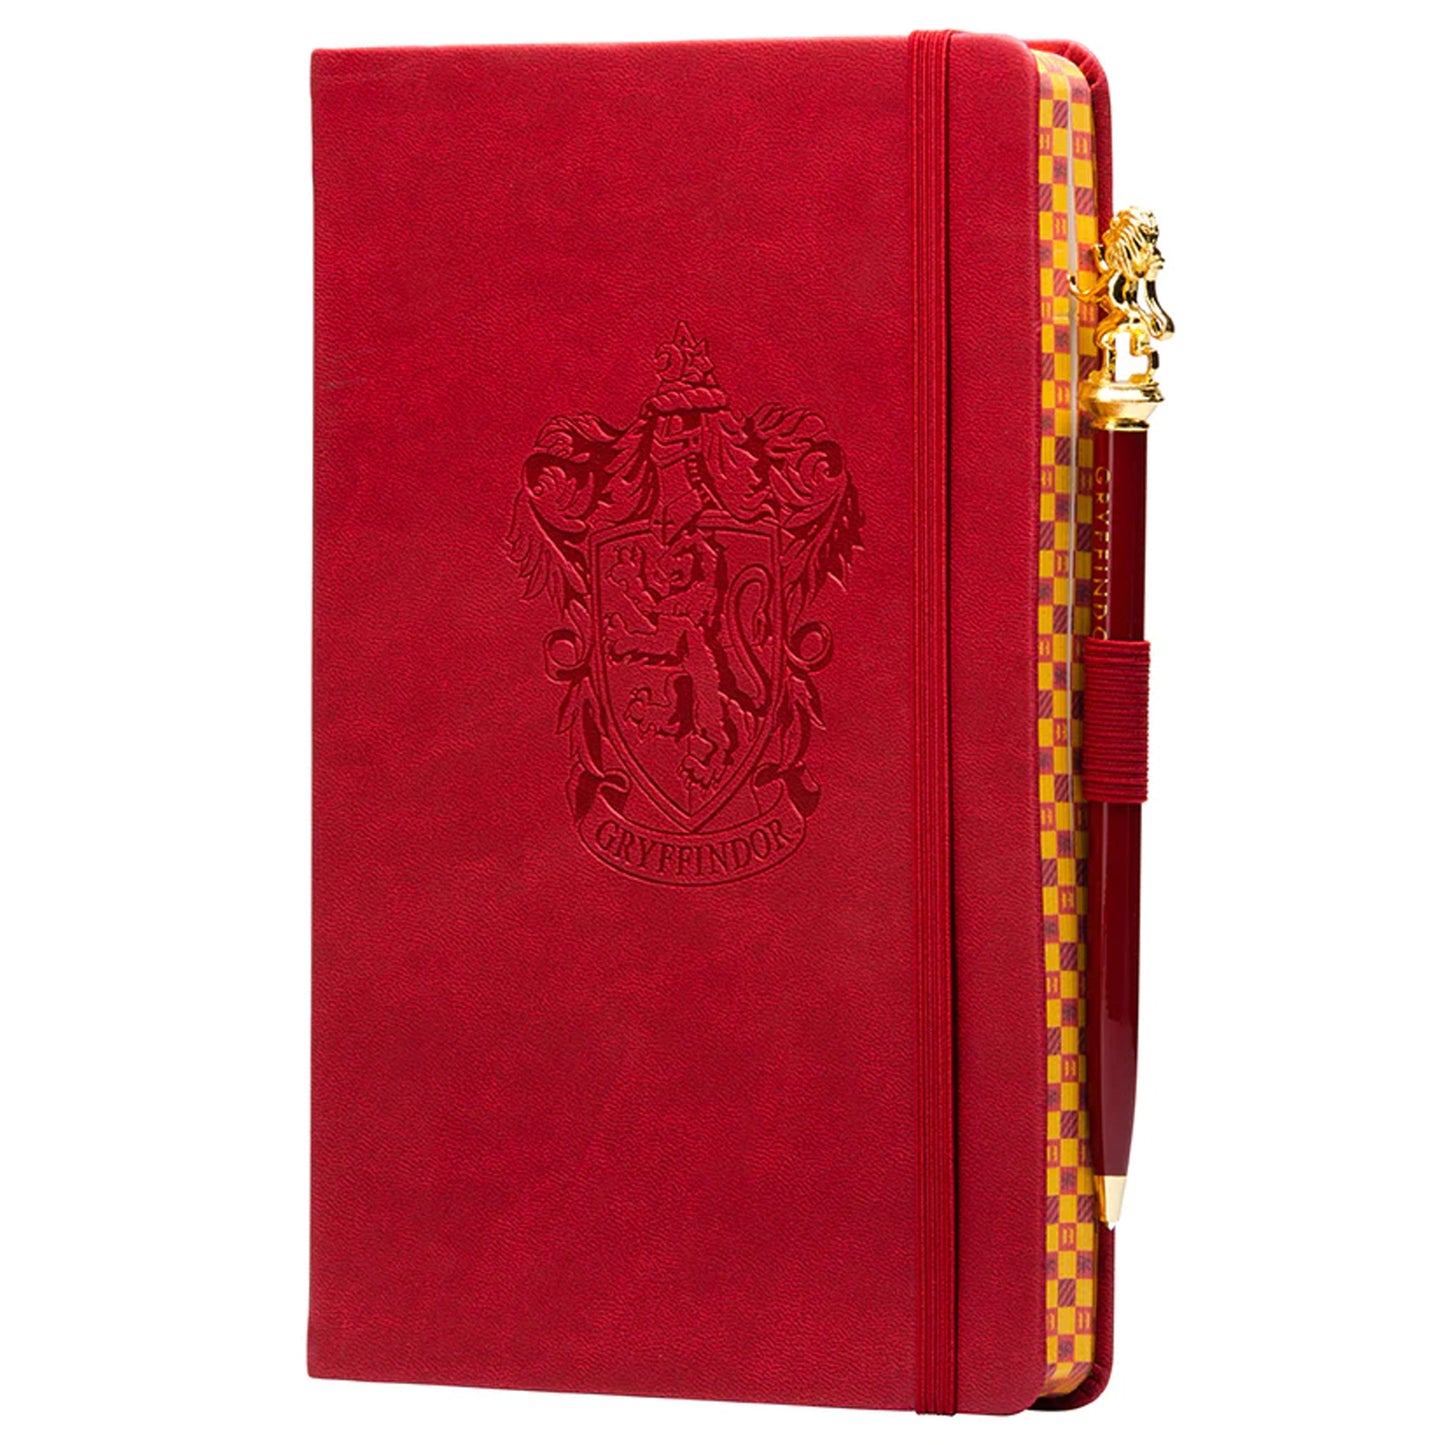 Gryffindor House Crest Harry Potter Softcover Journal Set